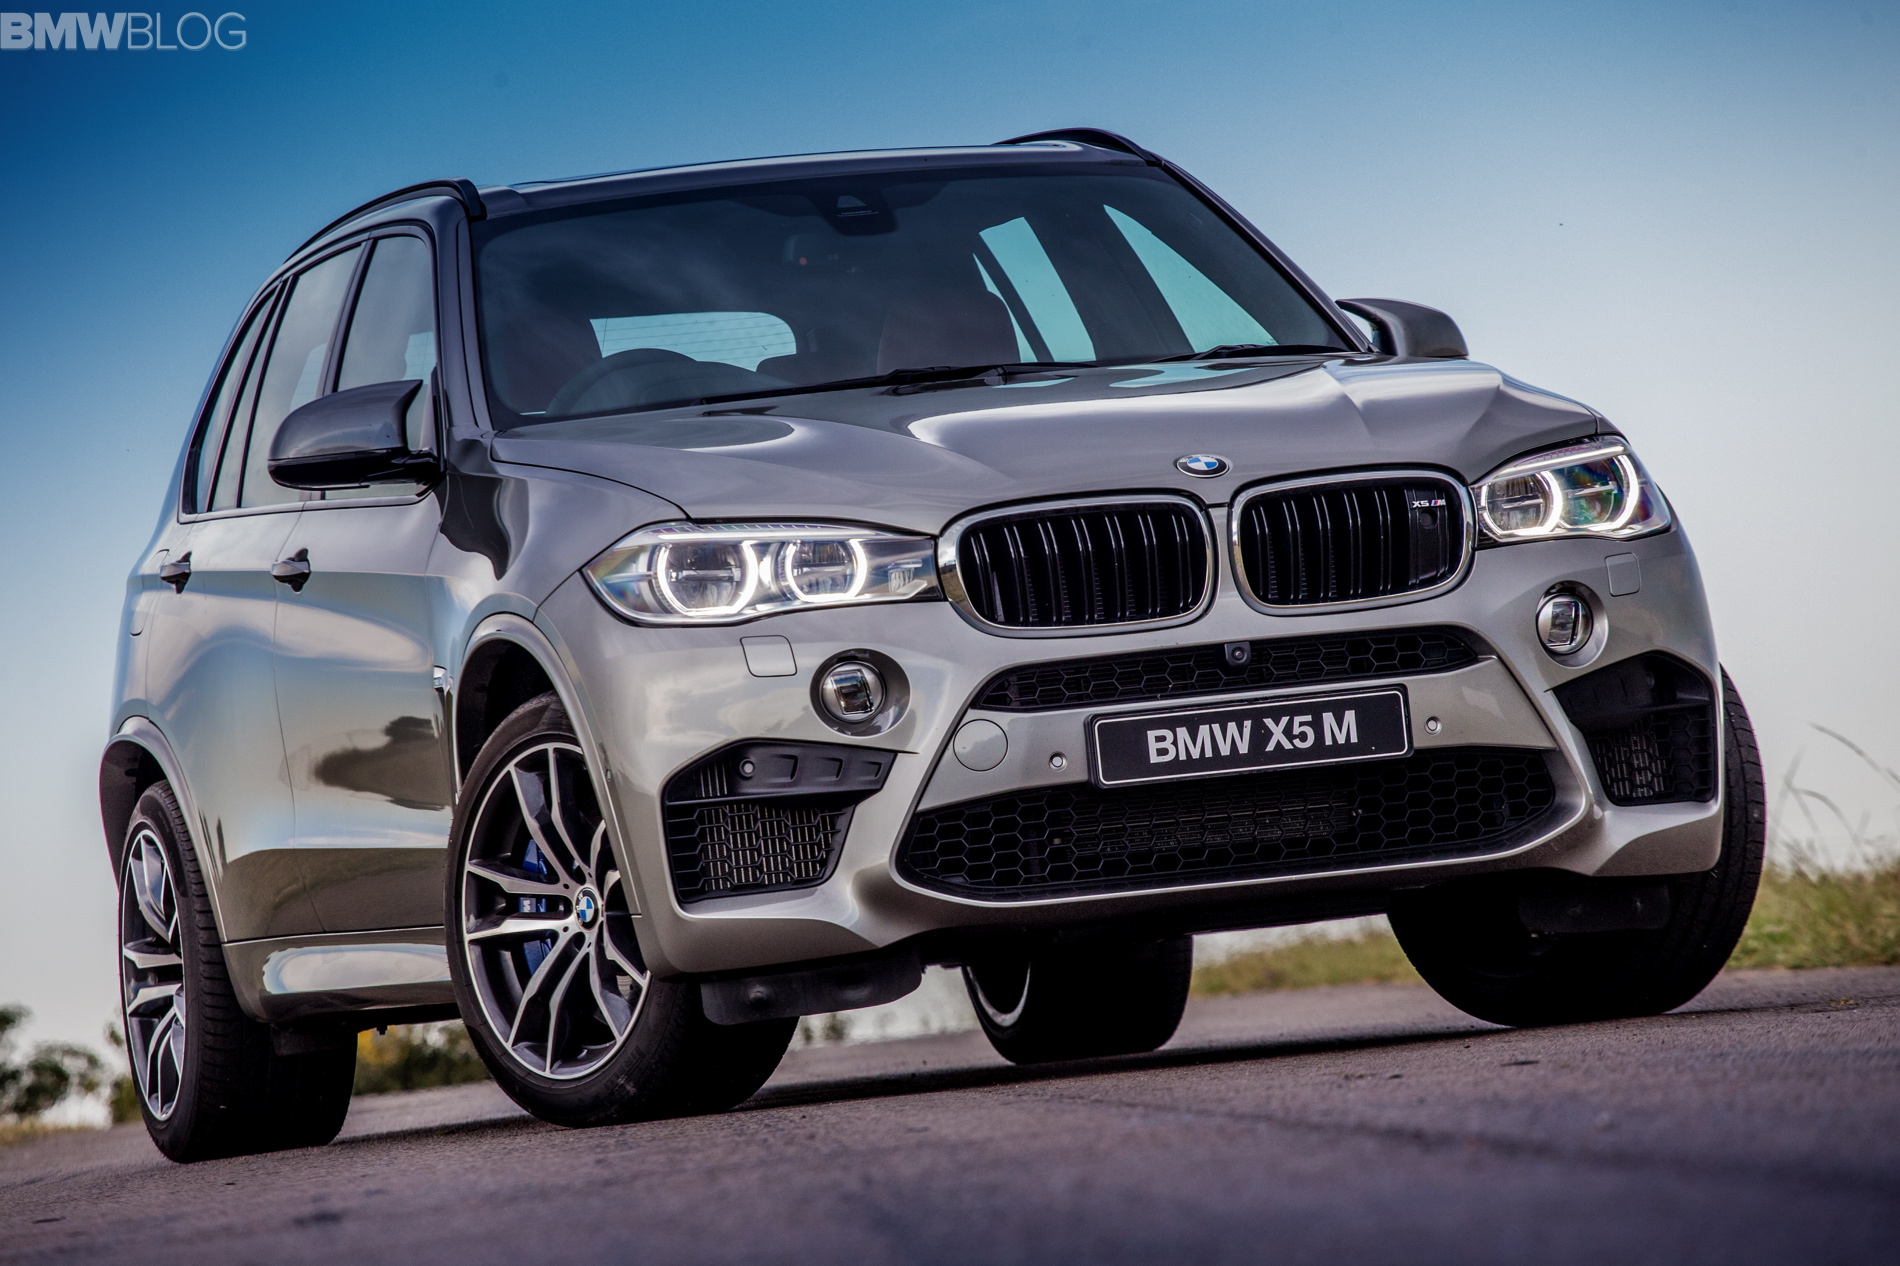 2015 BMW X5 M - New Photos